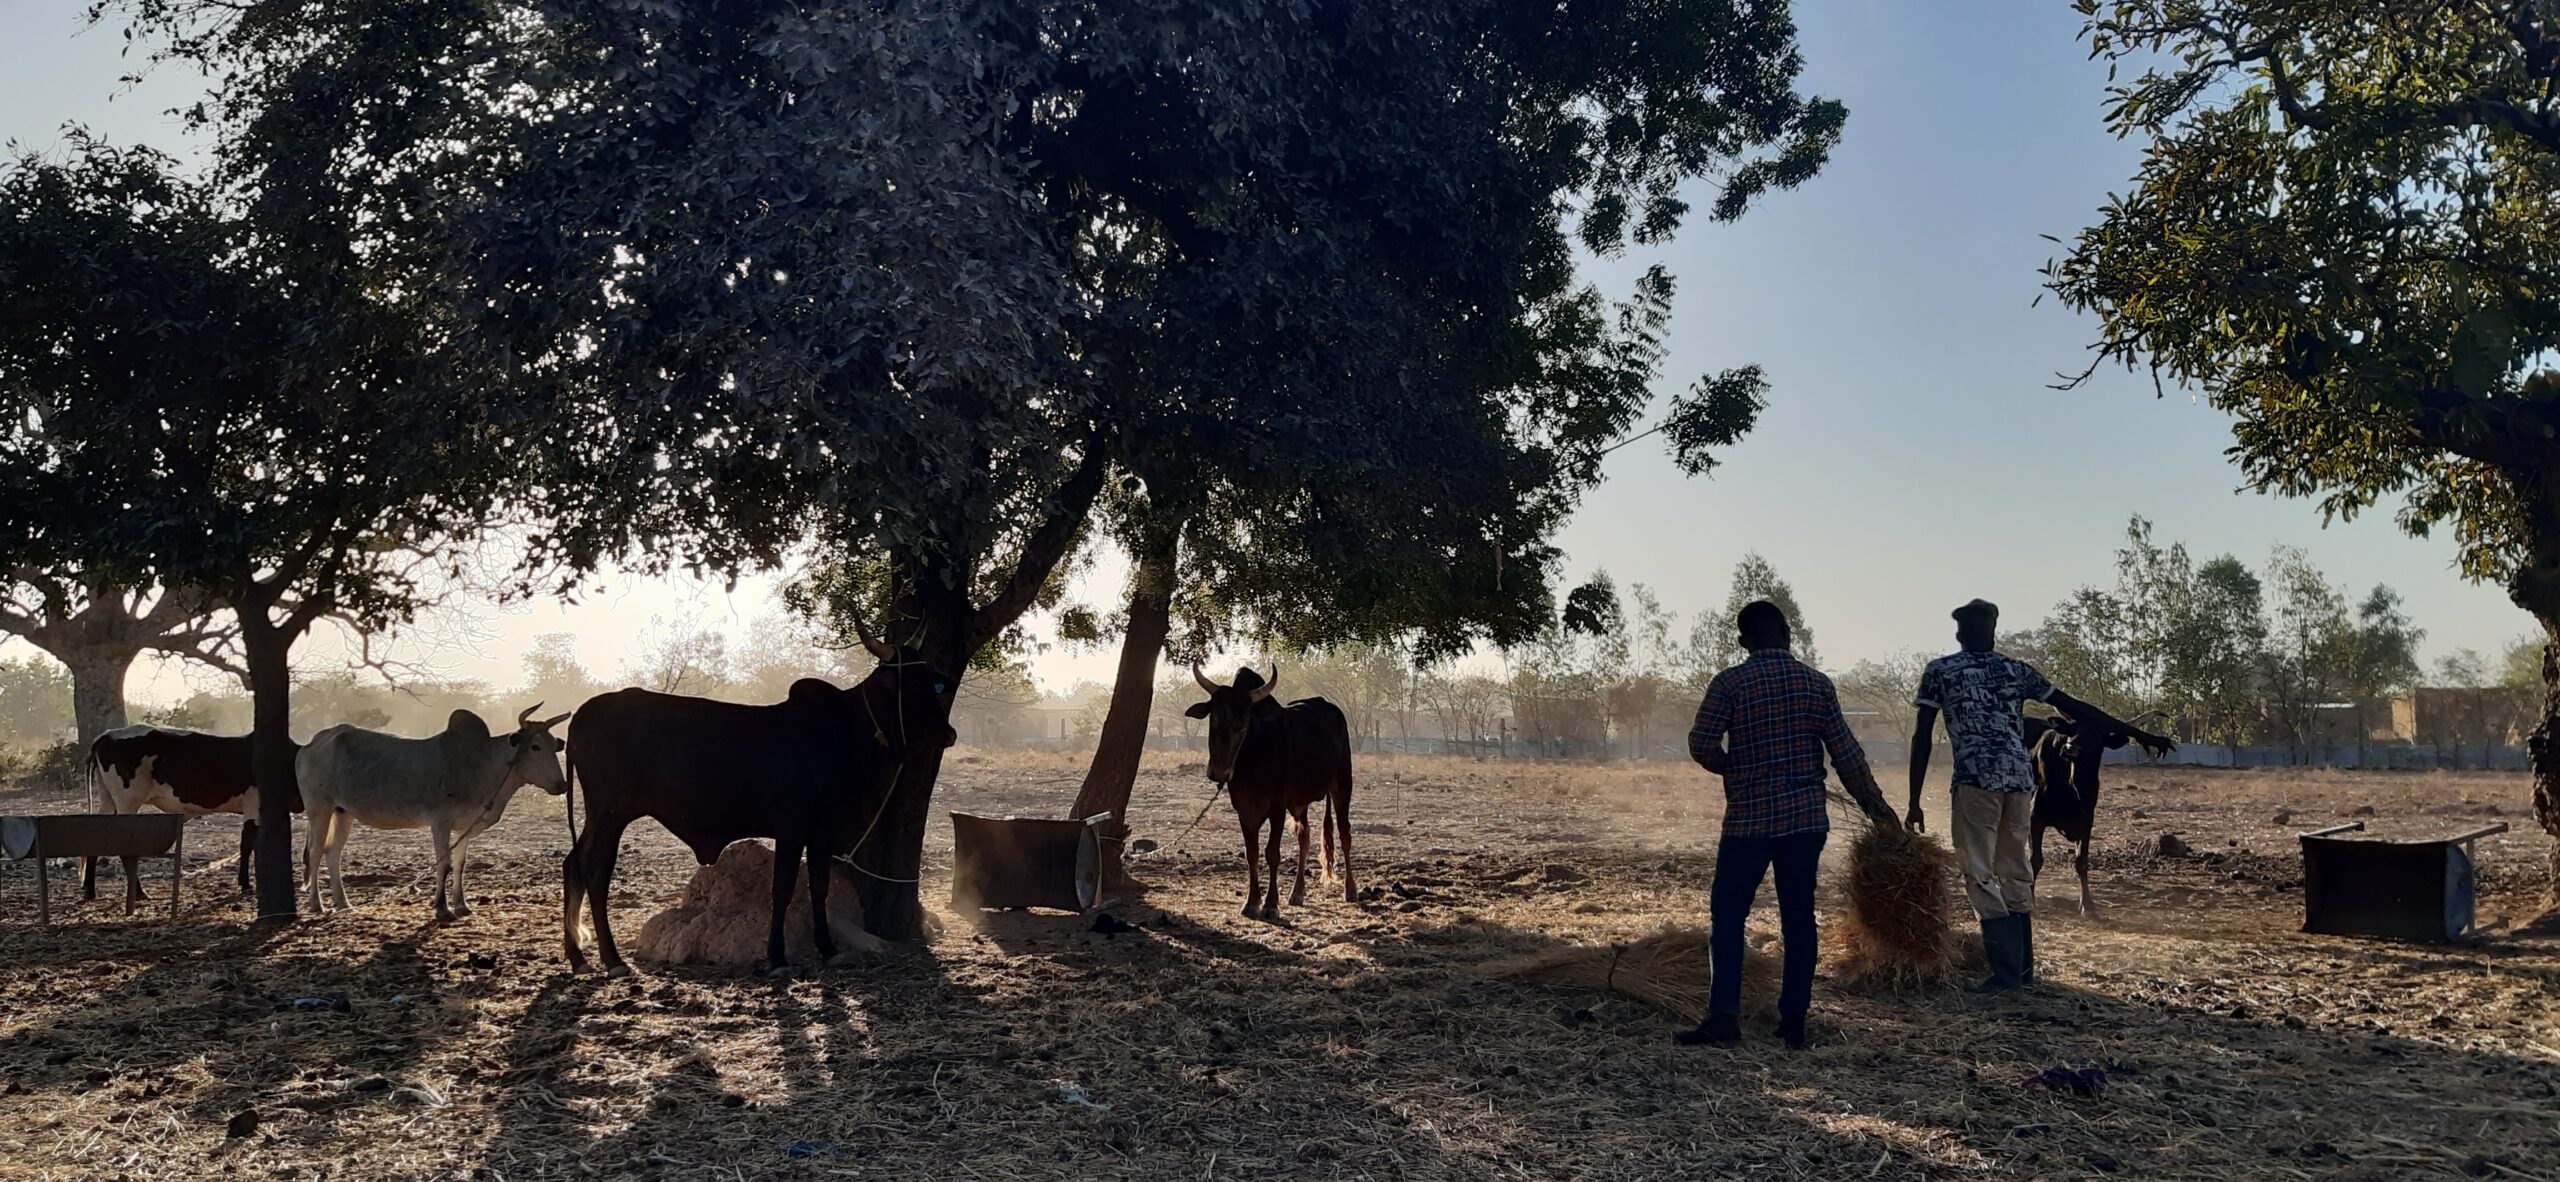 Cattle farm in the outskirts of Ouagadougou, Burkina Faso.